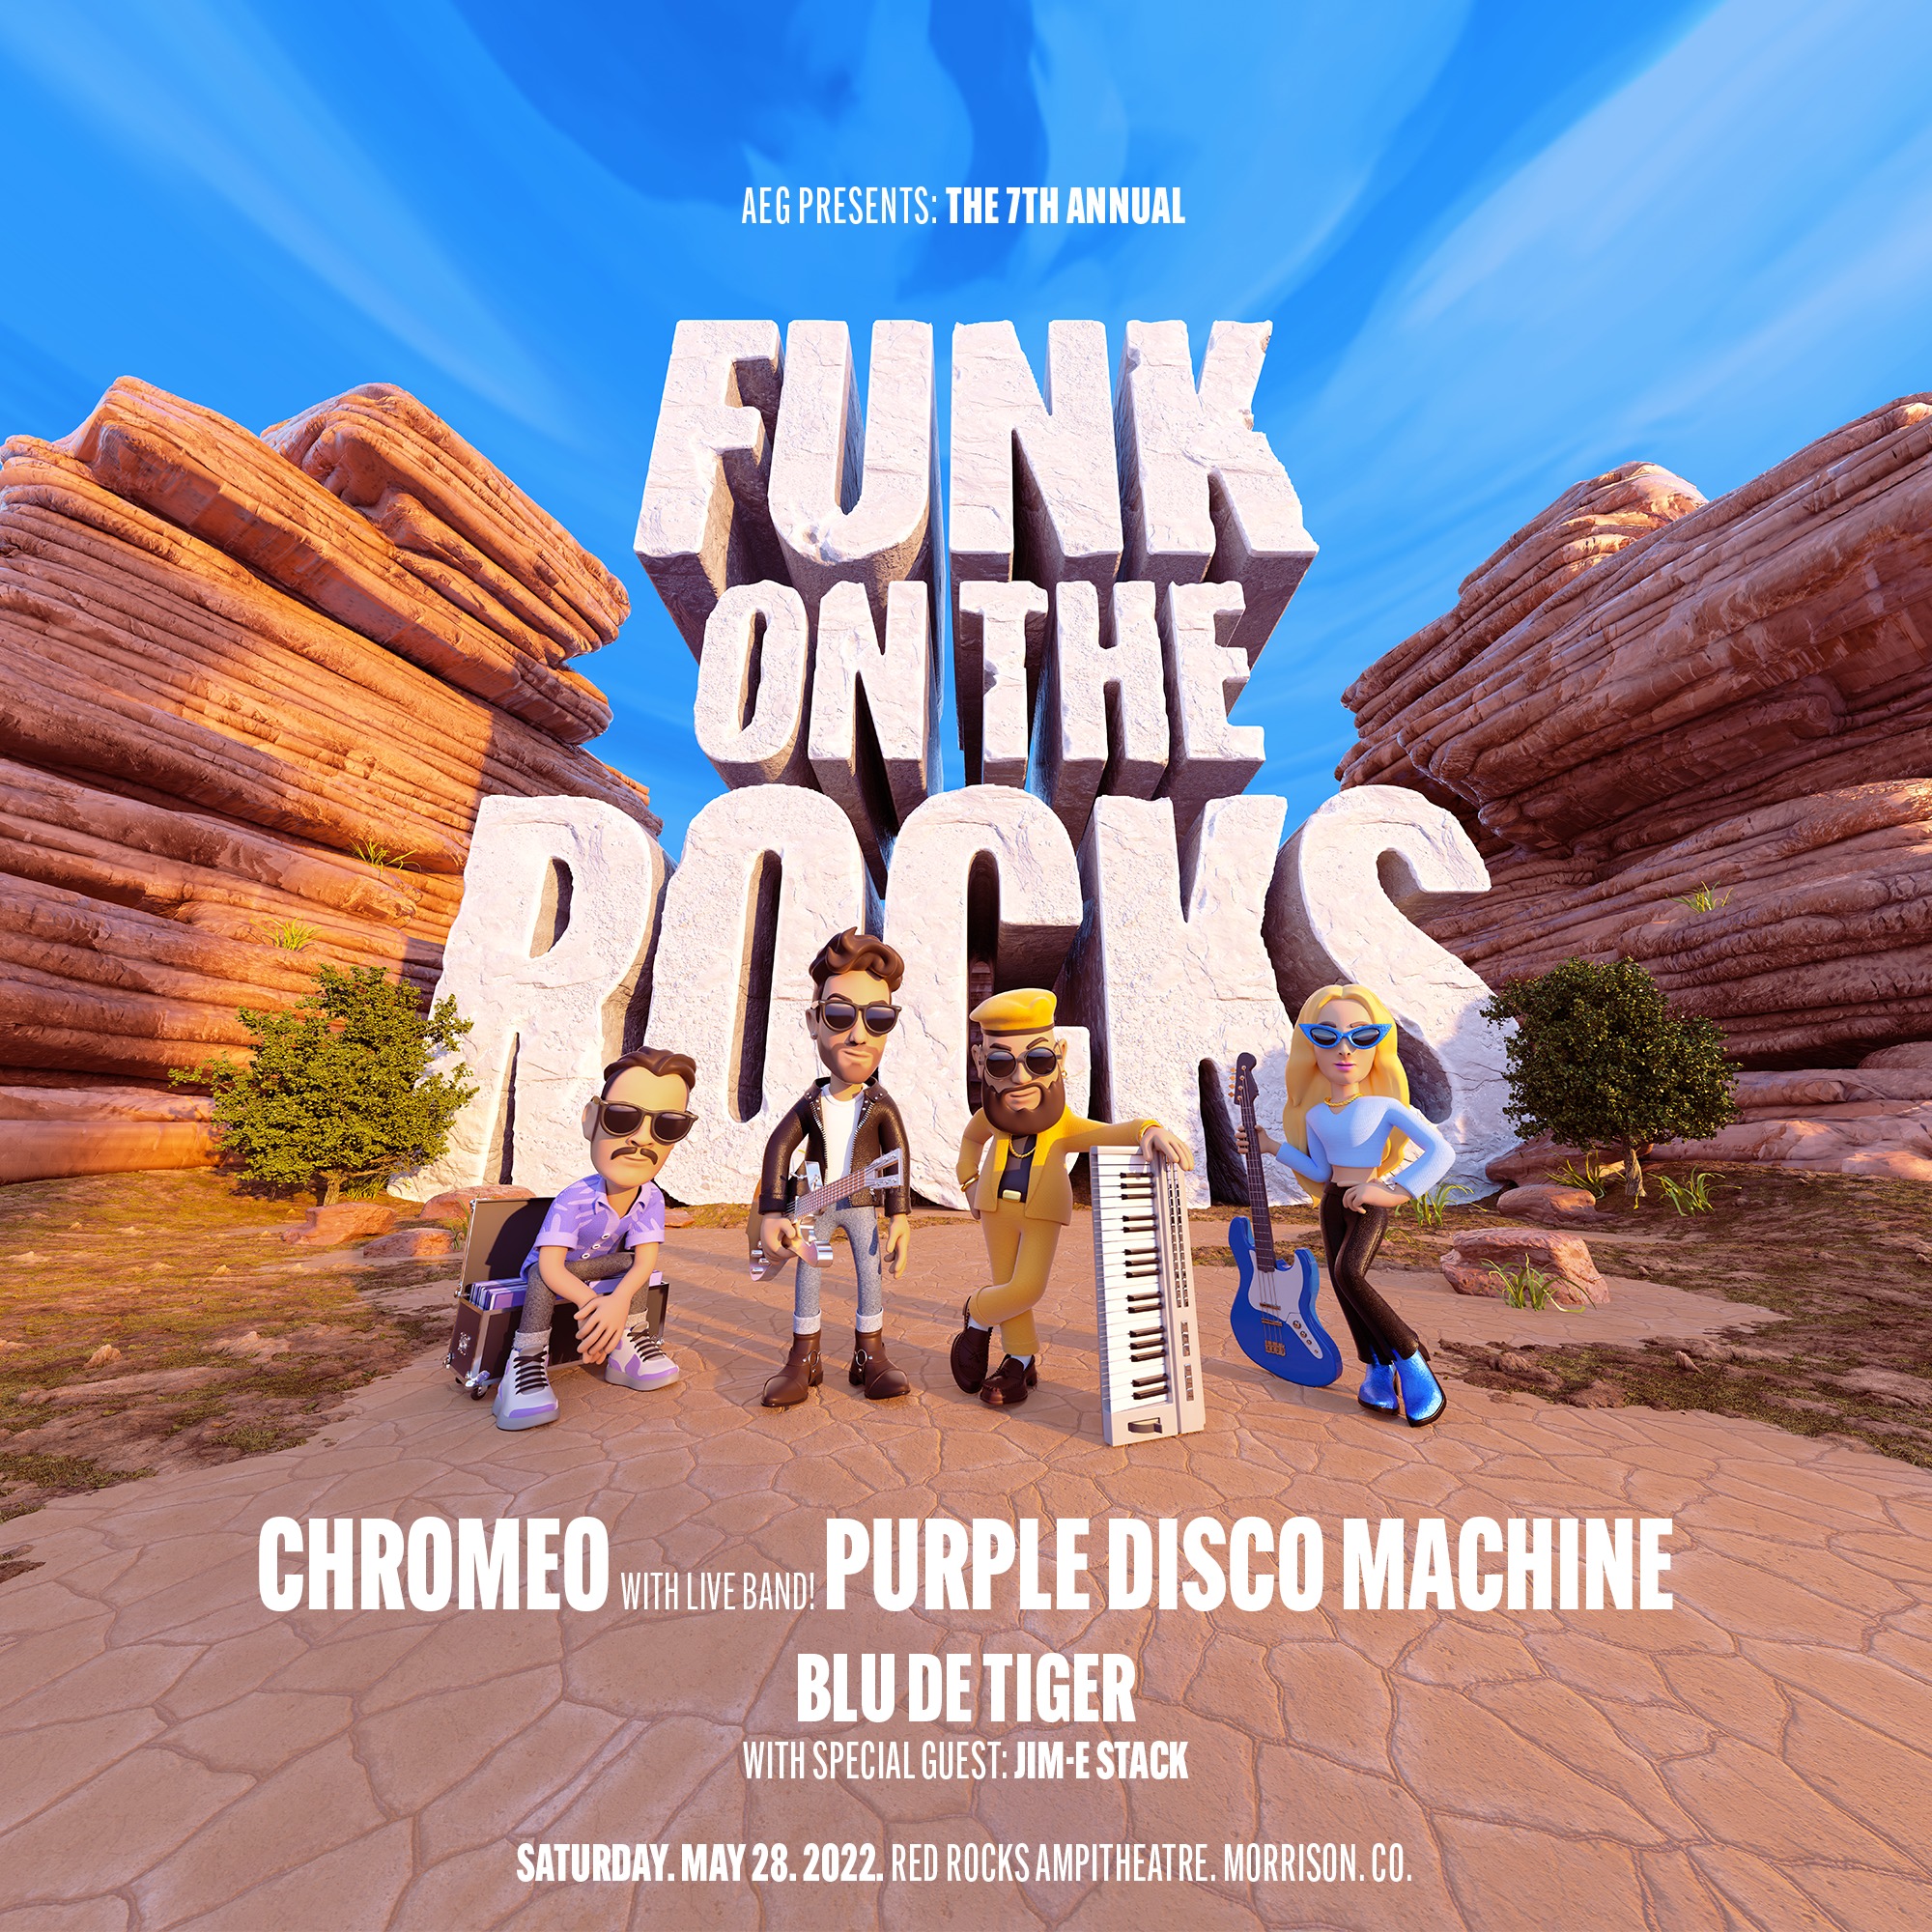 Chromeo Announces 7th Anniversary of Funk on the Rocks EDM Identity